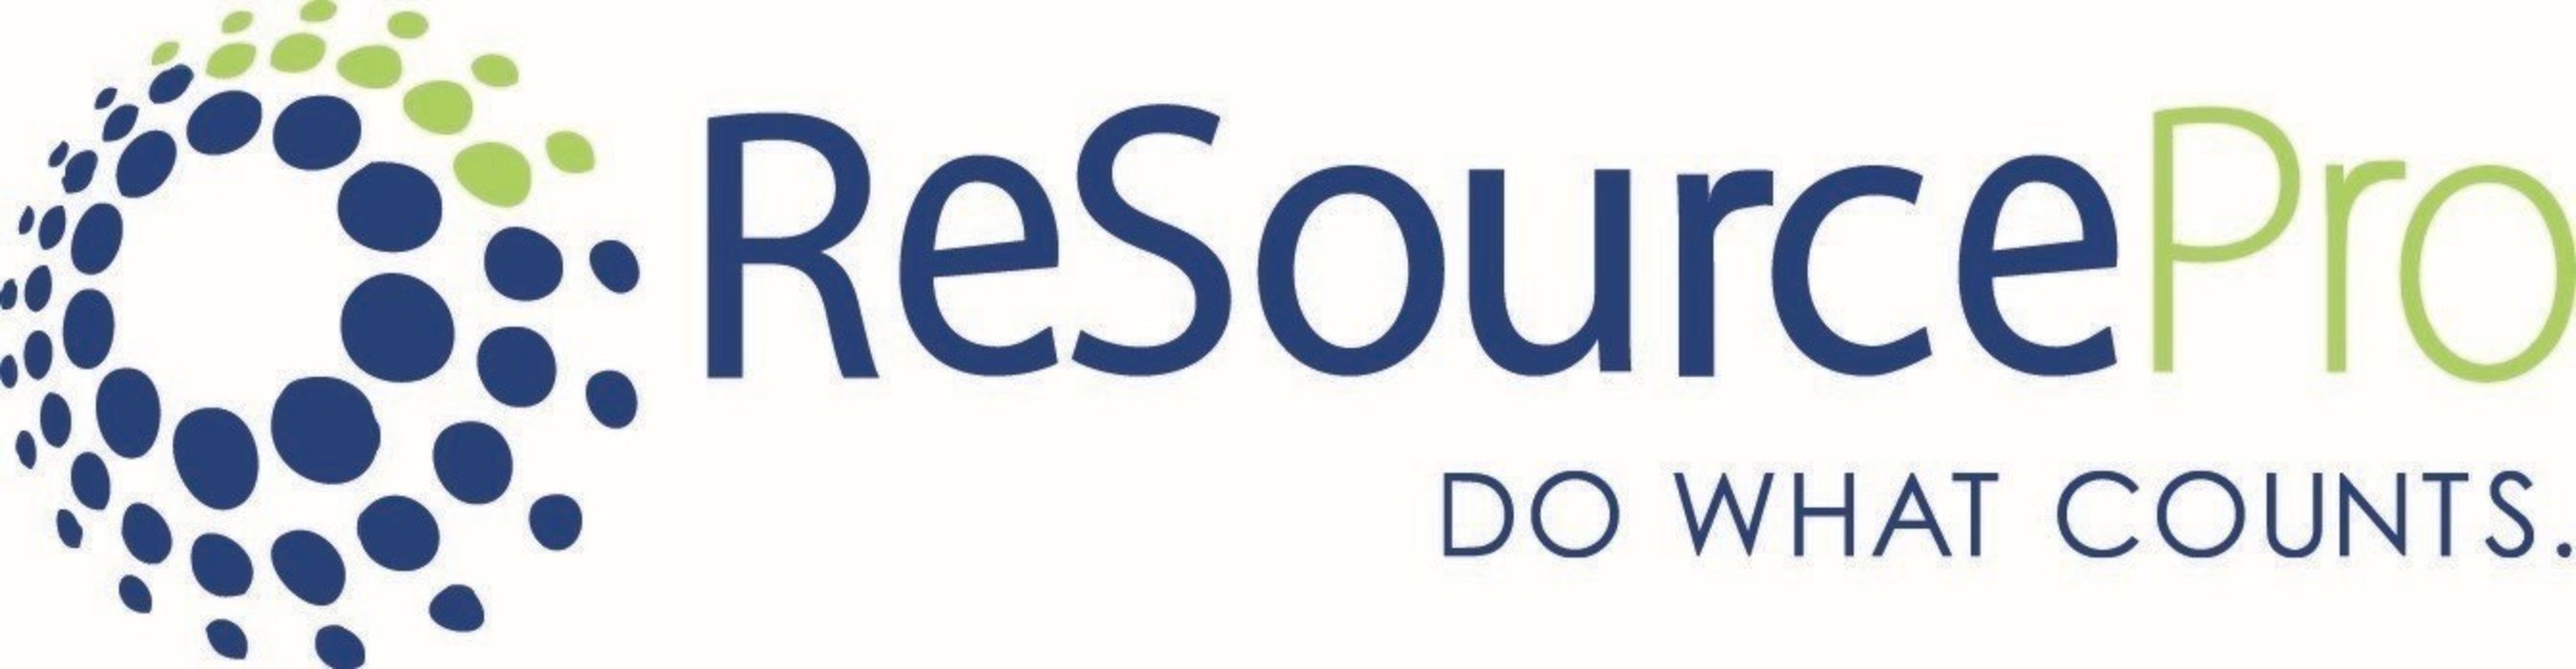 ReSource Pro Logo